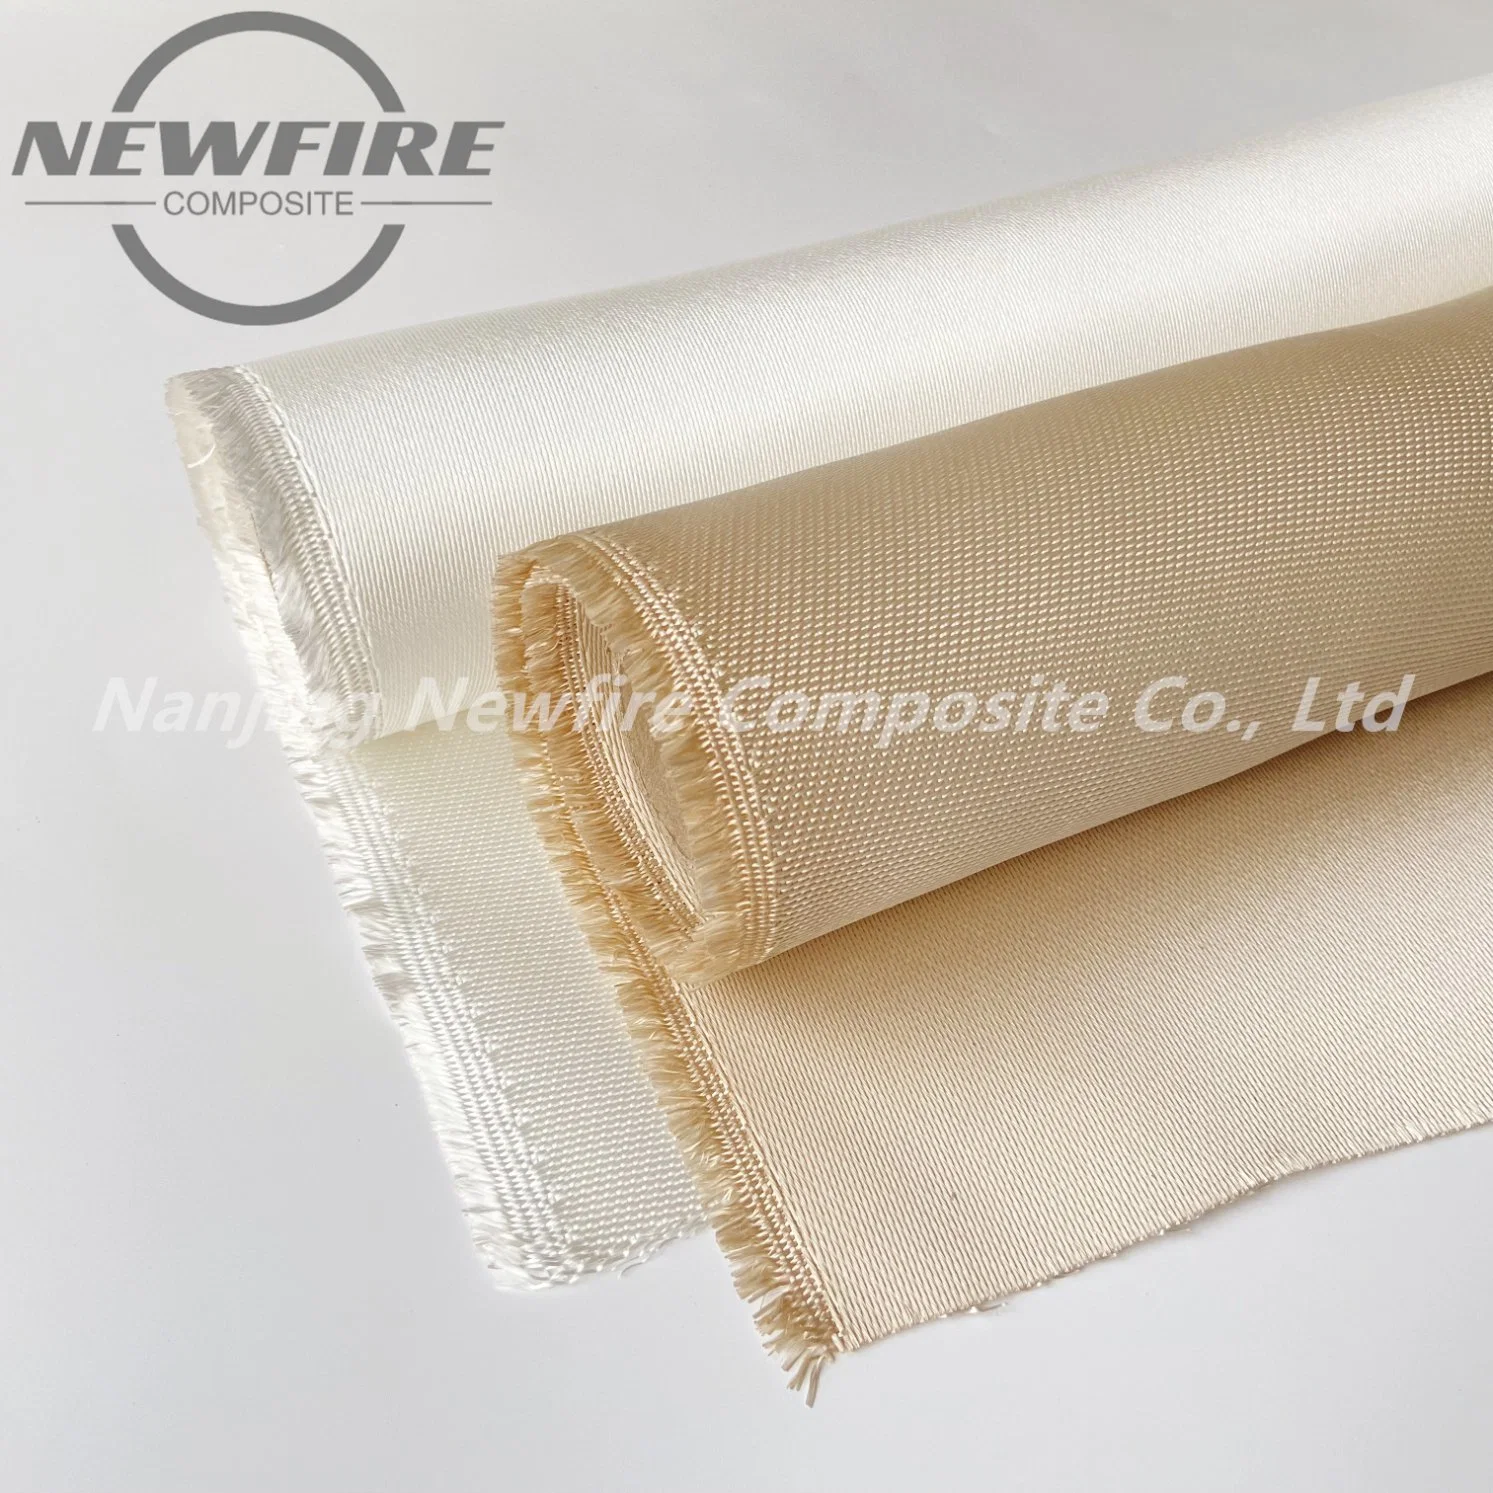 26oz High Temperature Resistant Heat Treated High Silica Fiberglass Cloth 1000 Degree High Temperature Resistant Fabric Filter Material Manufacturer